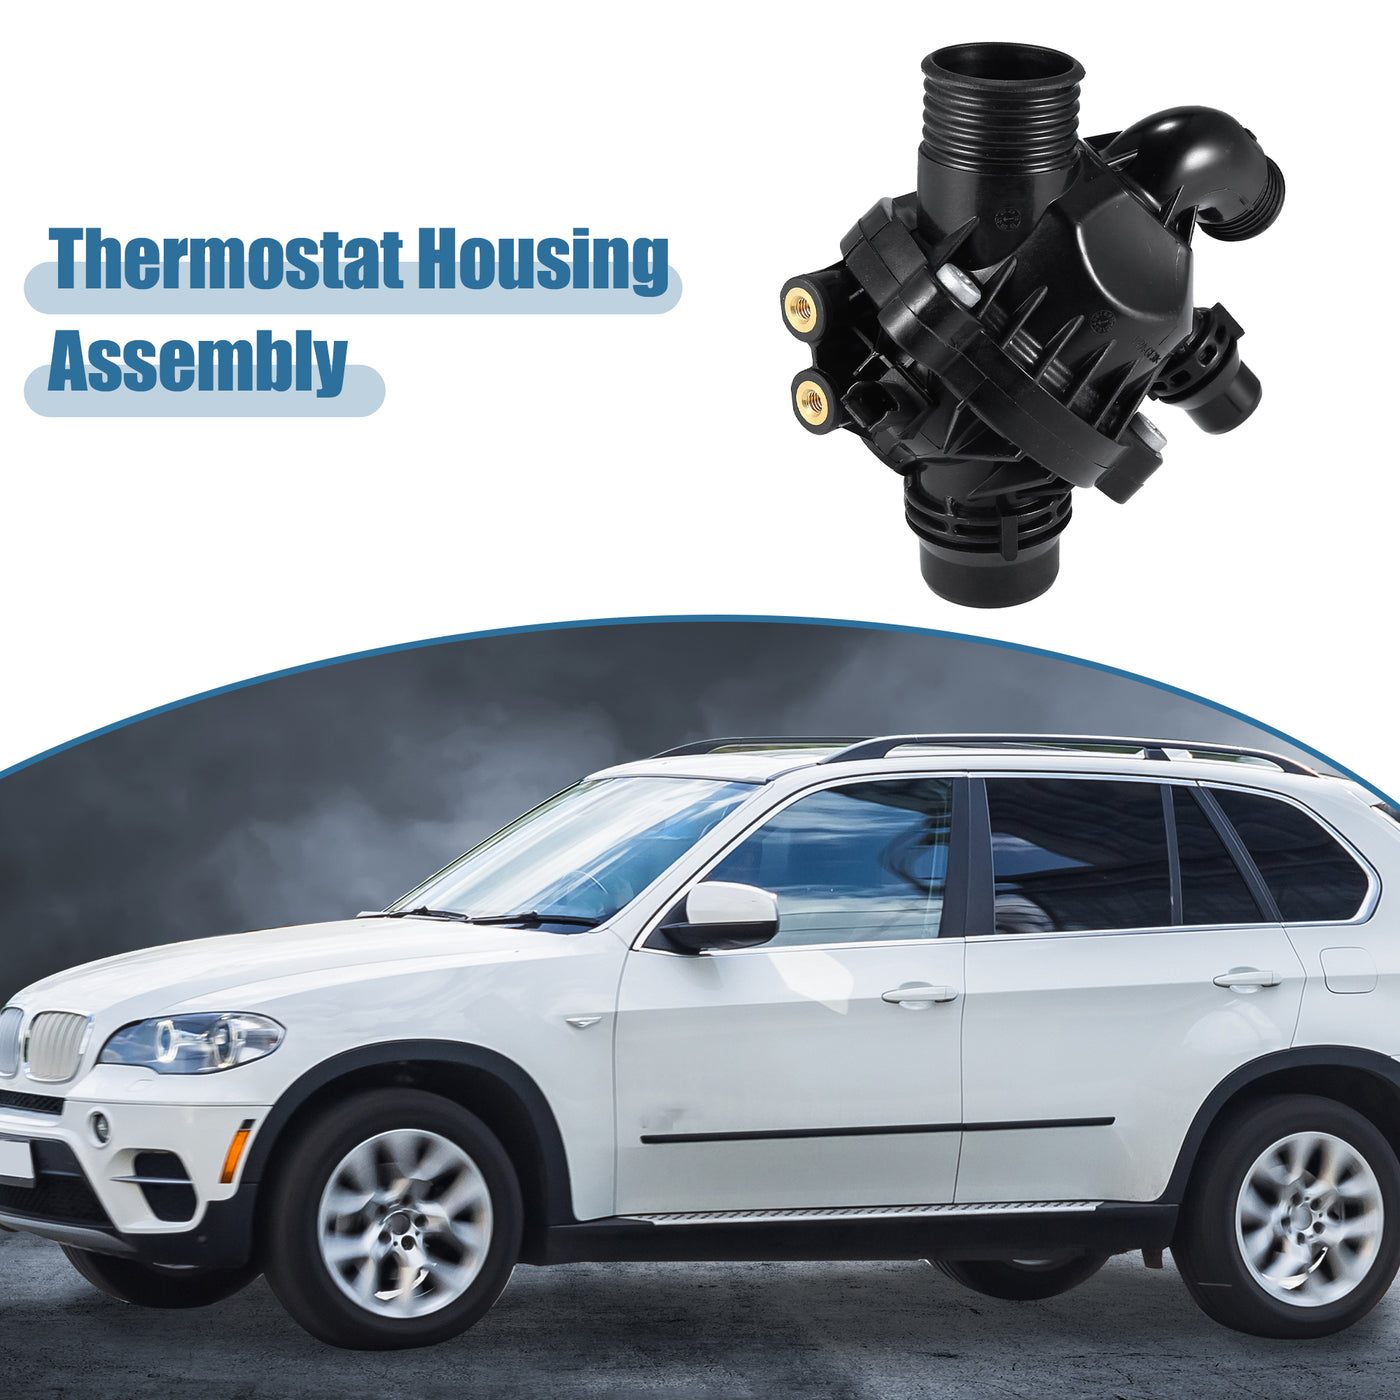 X AUTOHAUX Thermostat Housing Assembly 11537601158 Engine Coolant Thermostat Housing Assembly for BMW X1 X5 X6 135i 335i 2011 2012 2013